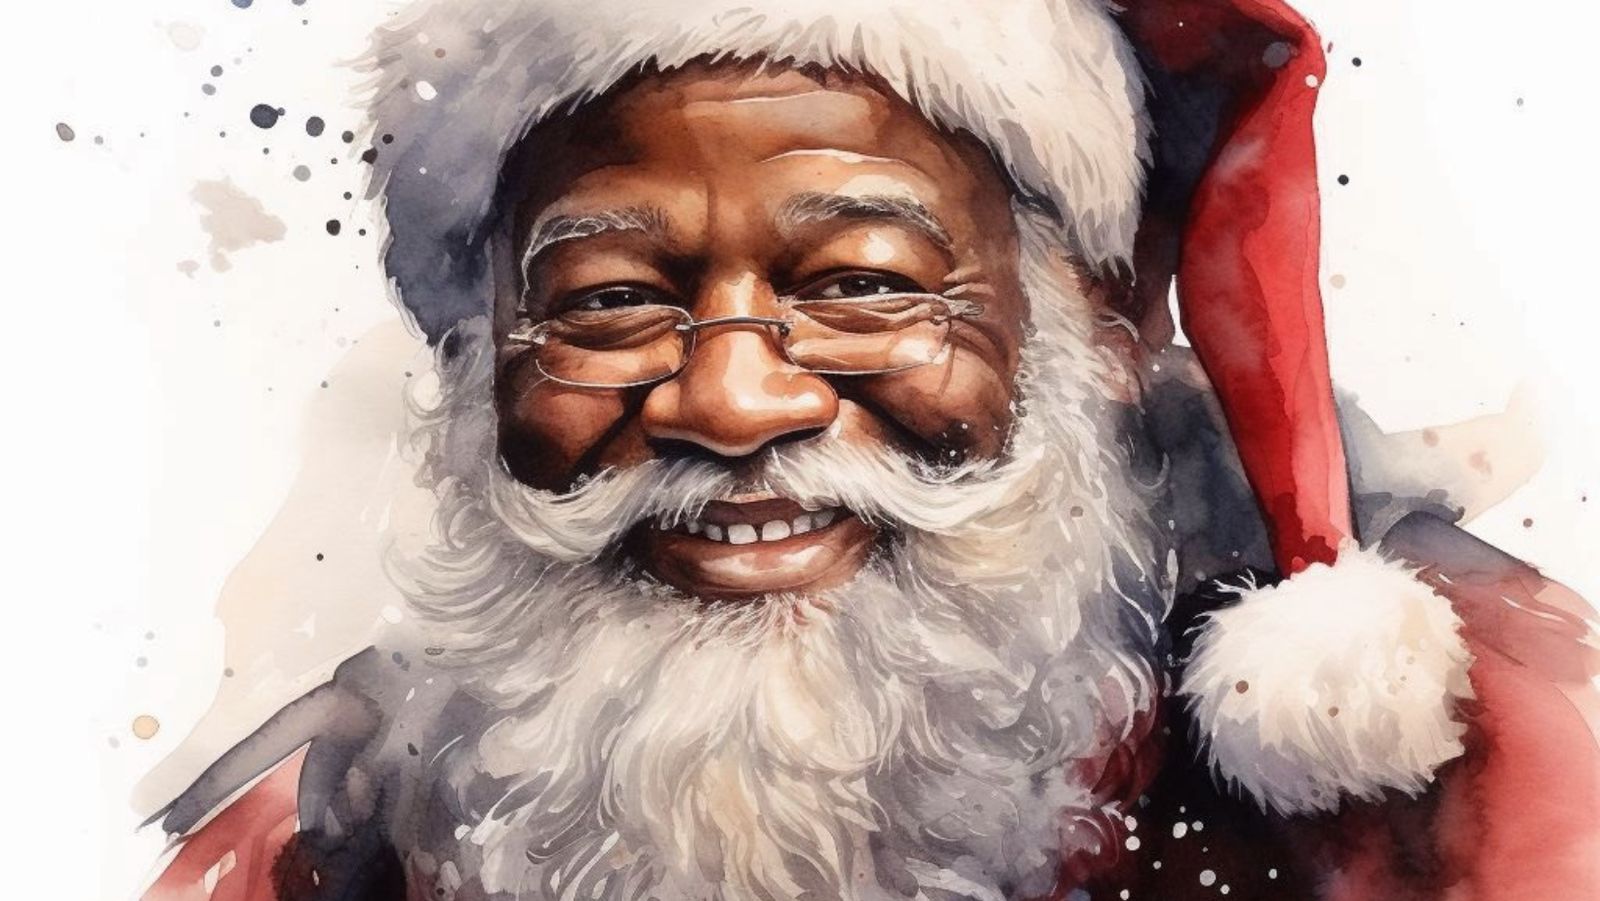 The Heartwarming Story of Santa Chris